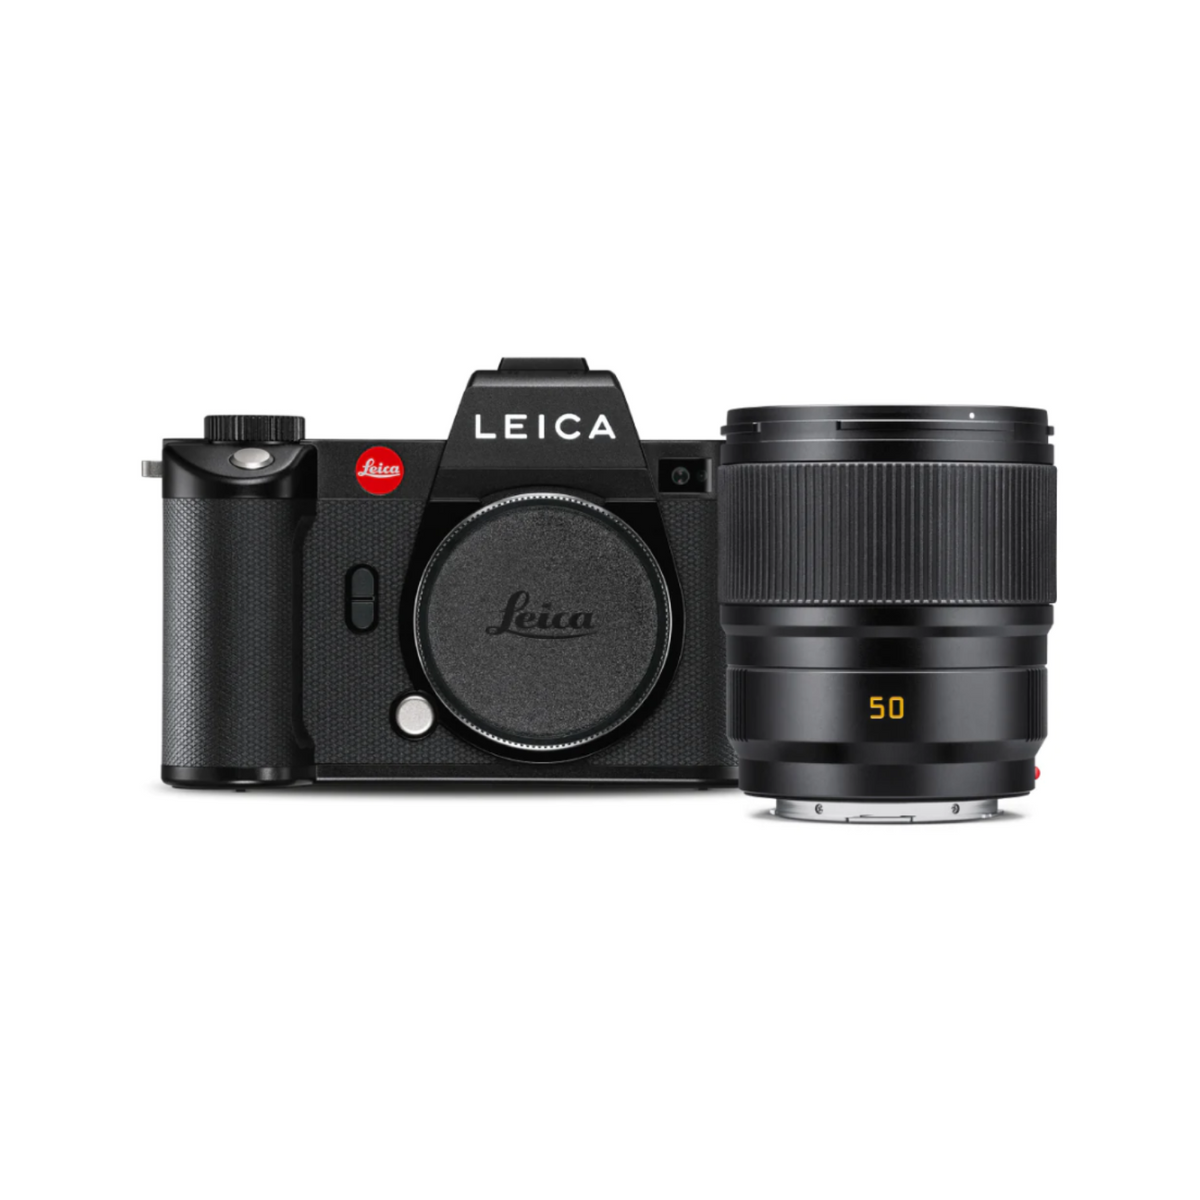 Leica SL2 With Summicron-SL 50mm F/2 ASPH. Lens Kit